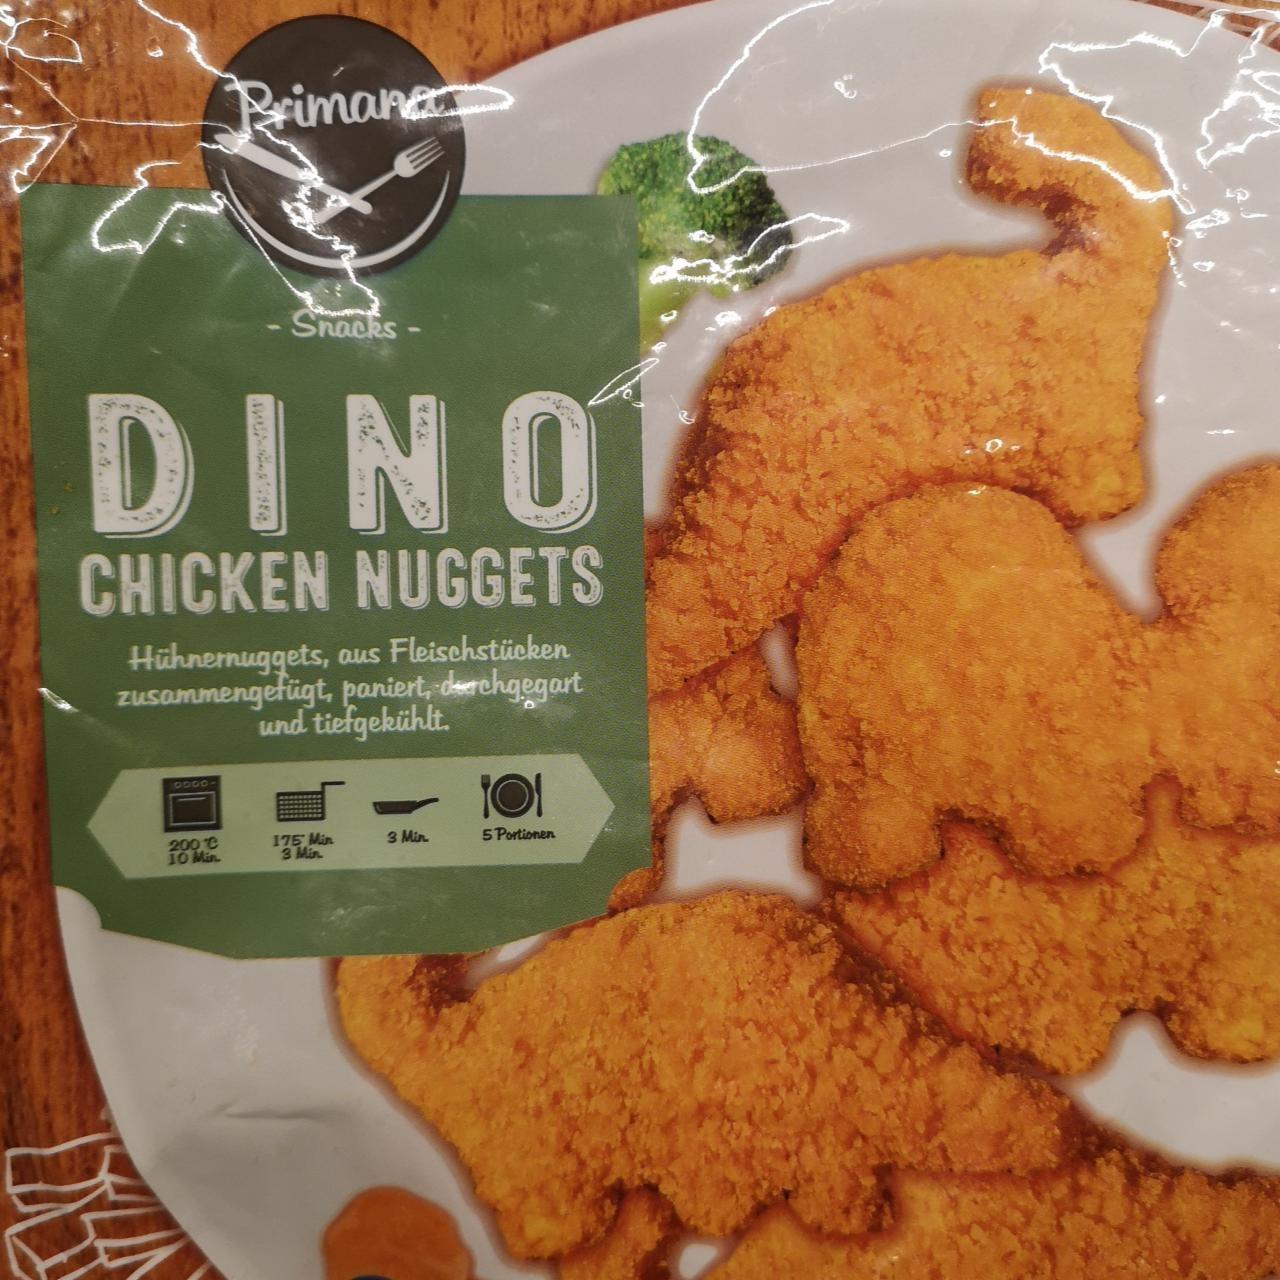 Képek - Dino chicken nuggets Primana